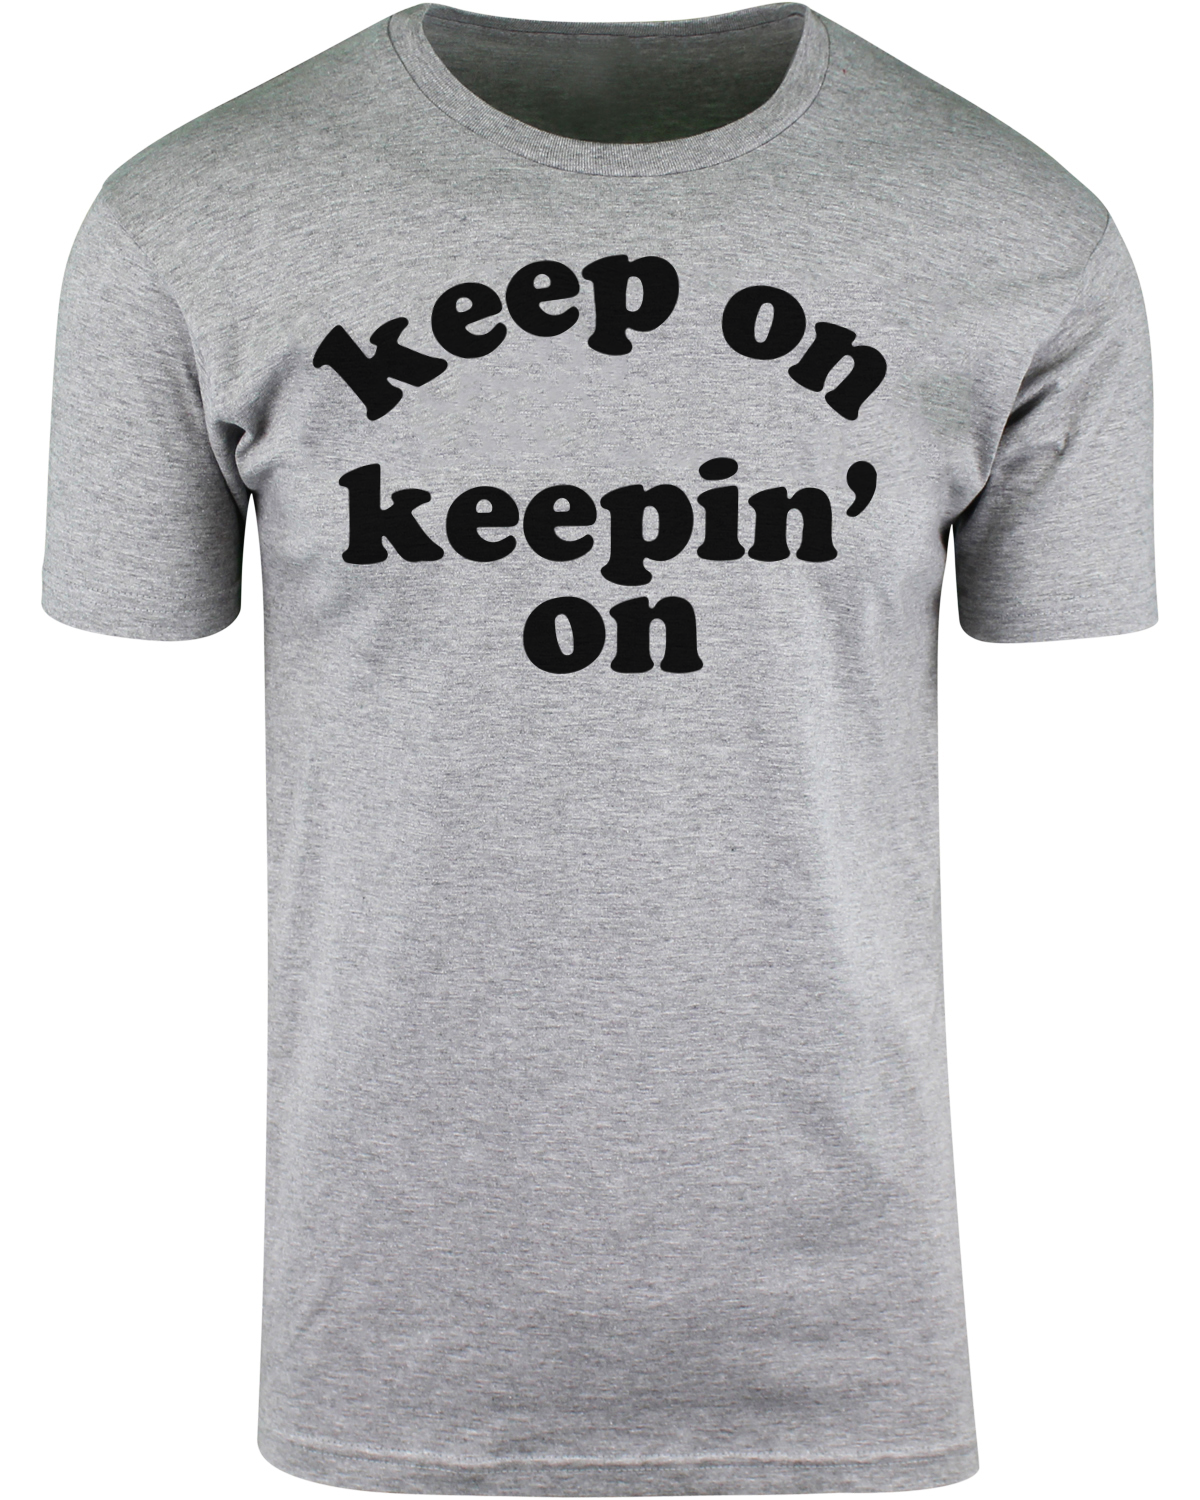 Keep on Keepin' On T-Shirt - Retro Groove